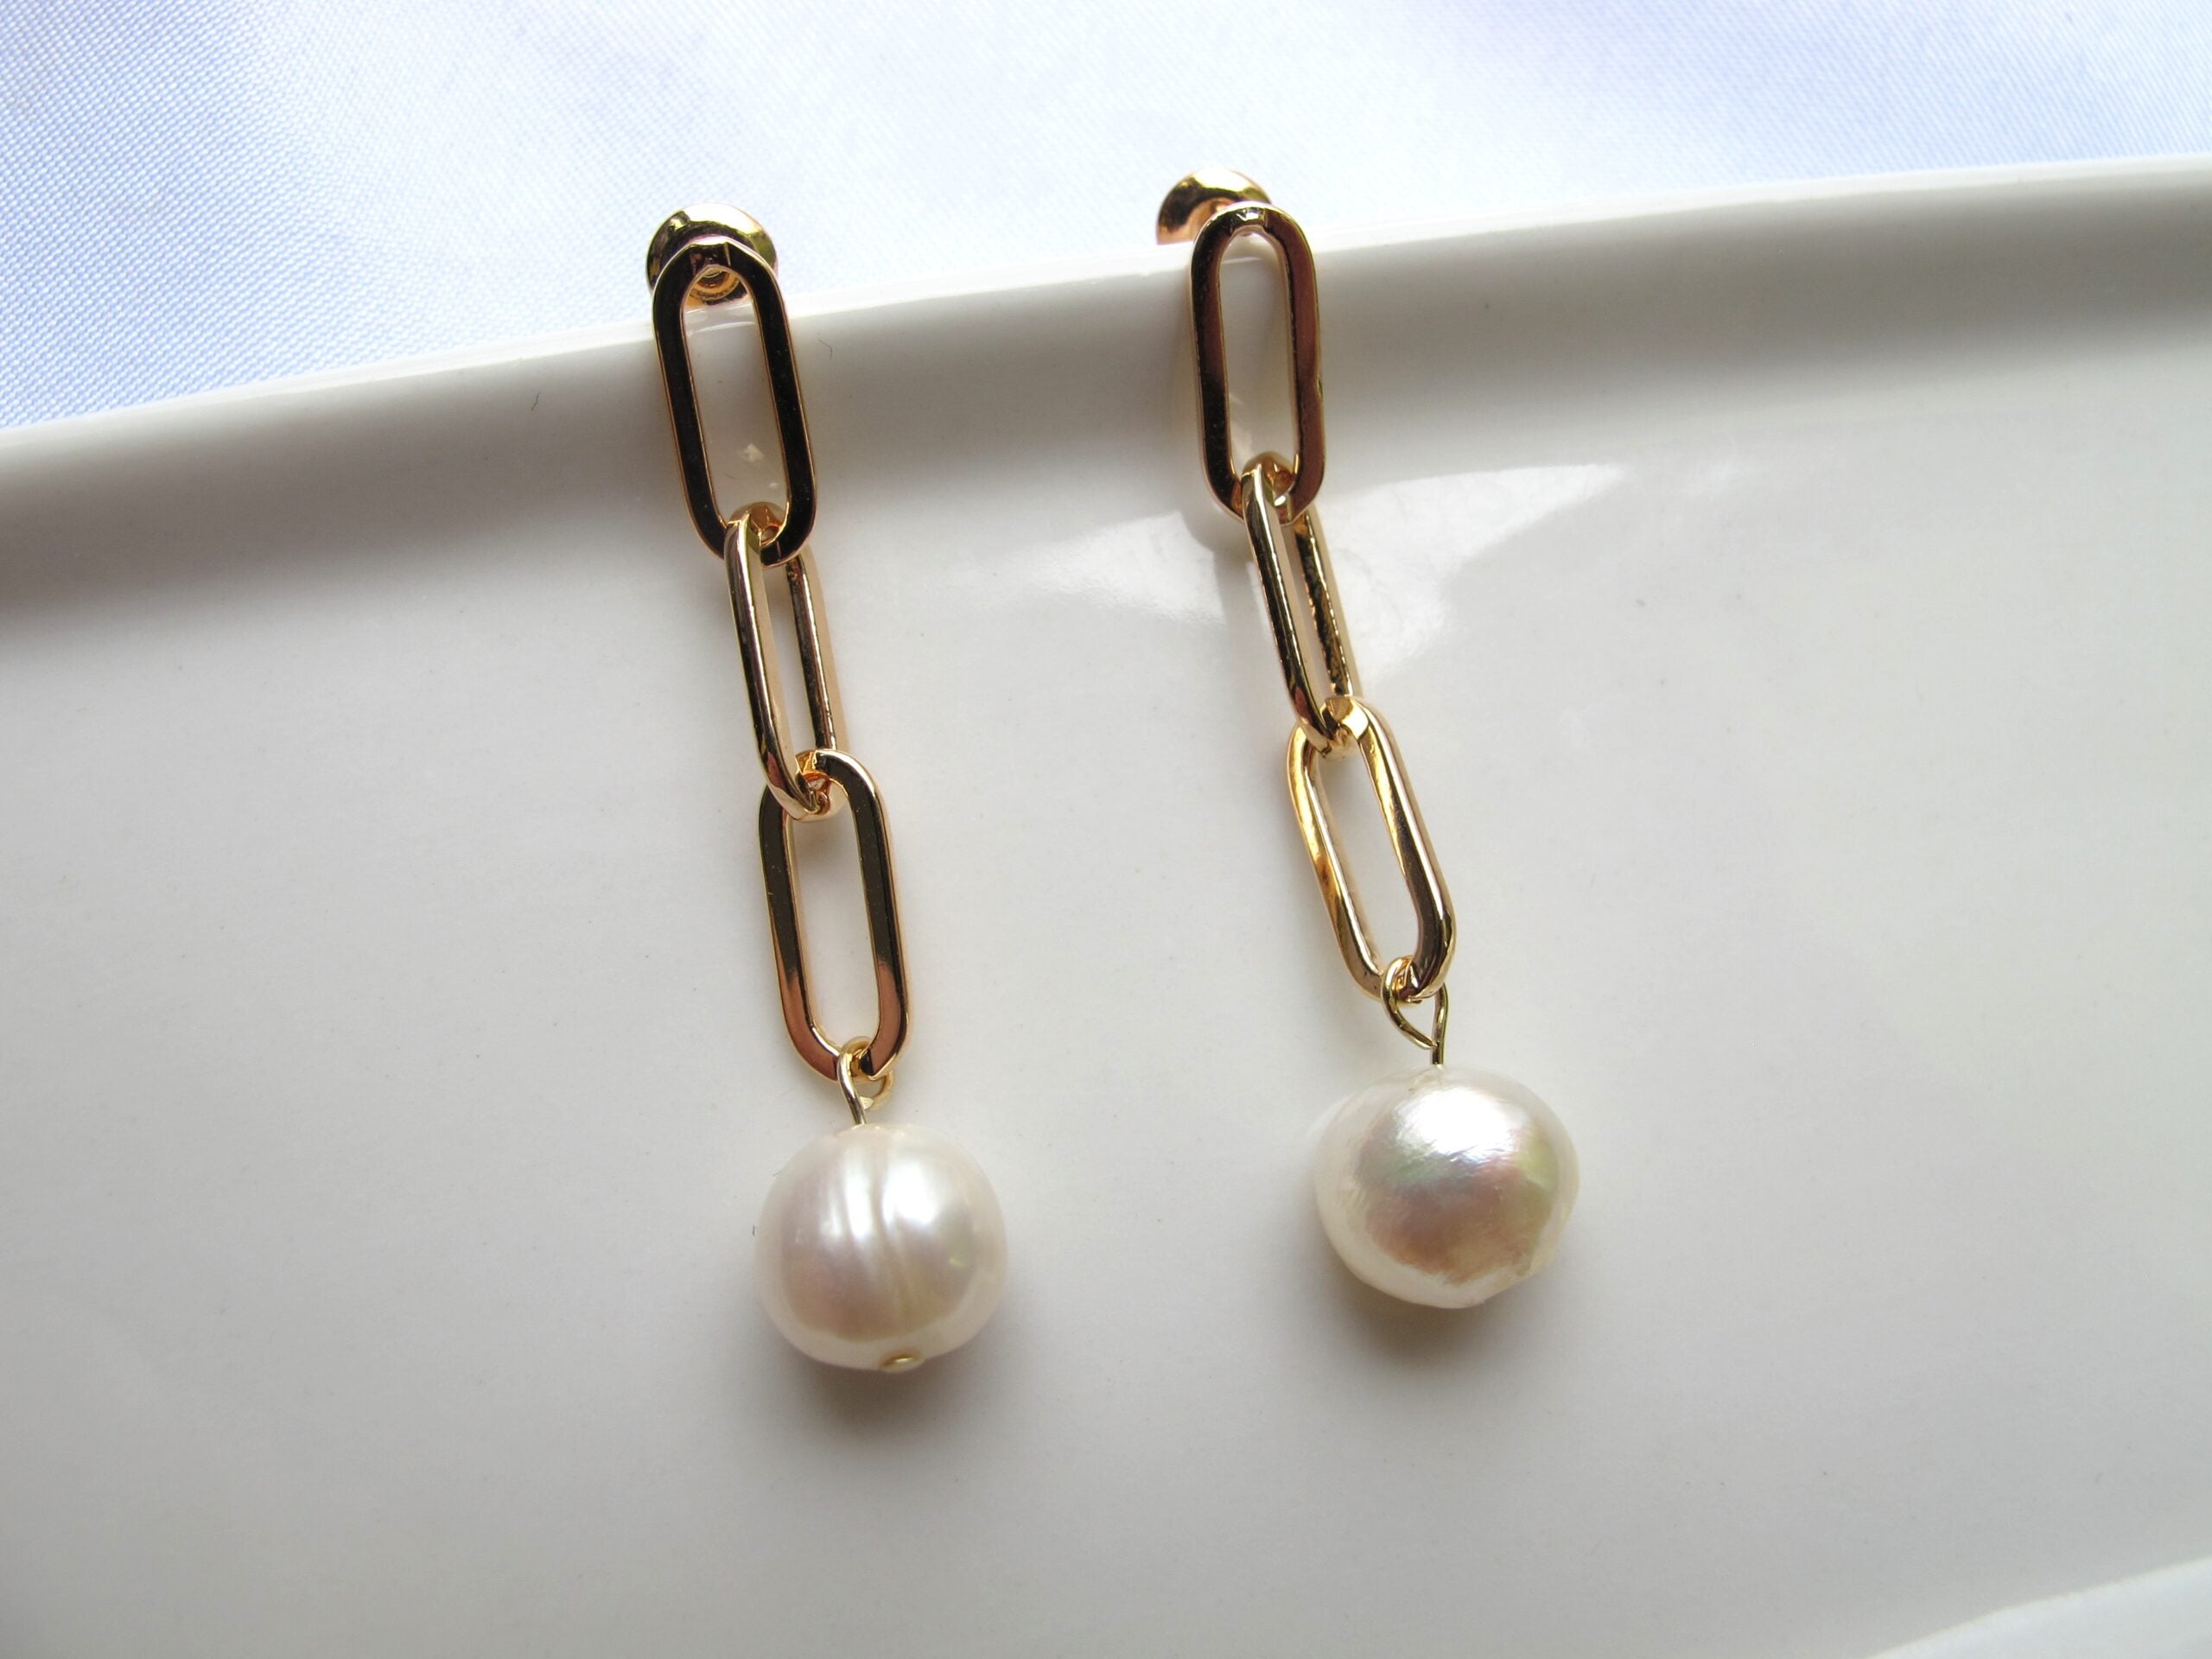 Chain earrings with fresh water pearls – Delhi